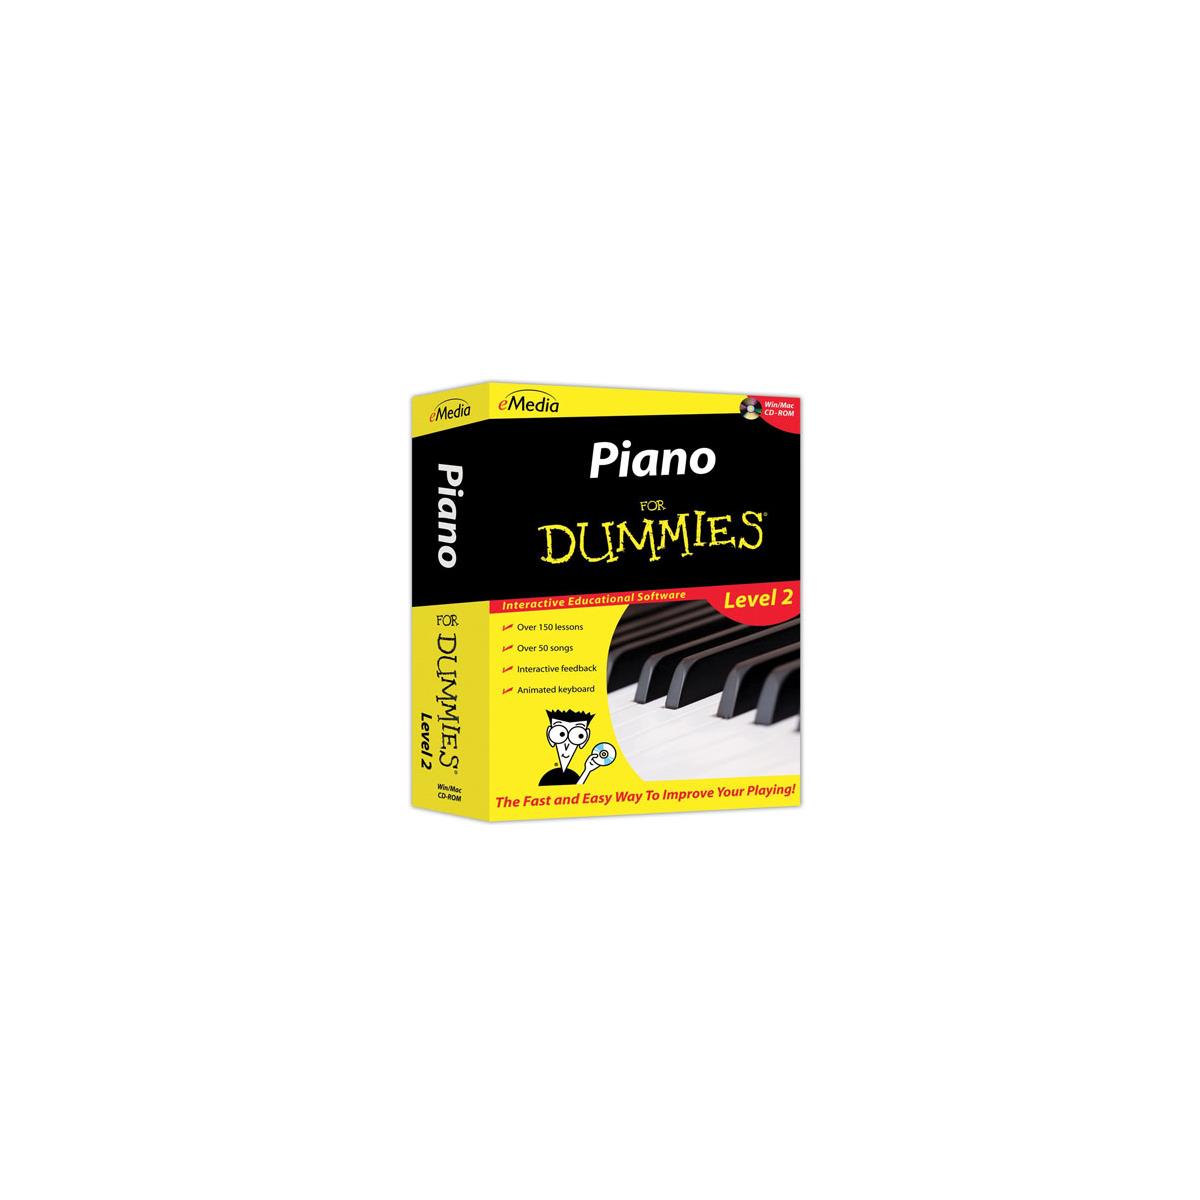 Image of eMedia Piano for Dummies Level 2 CD-ROM